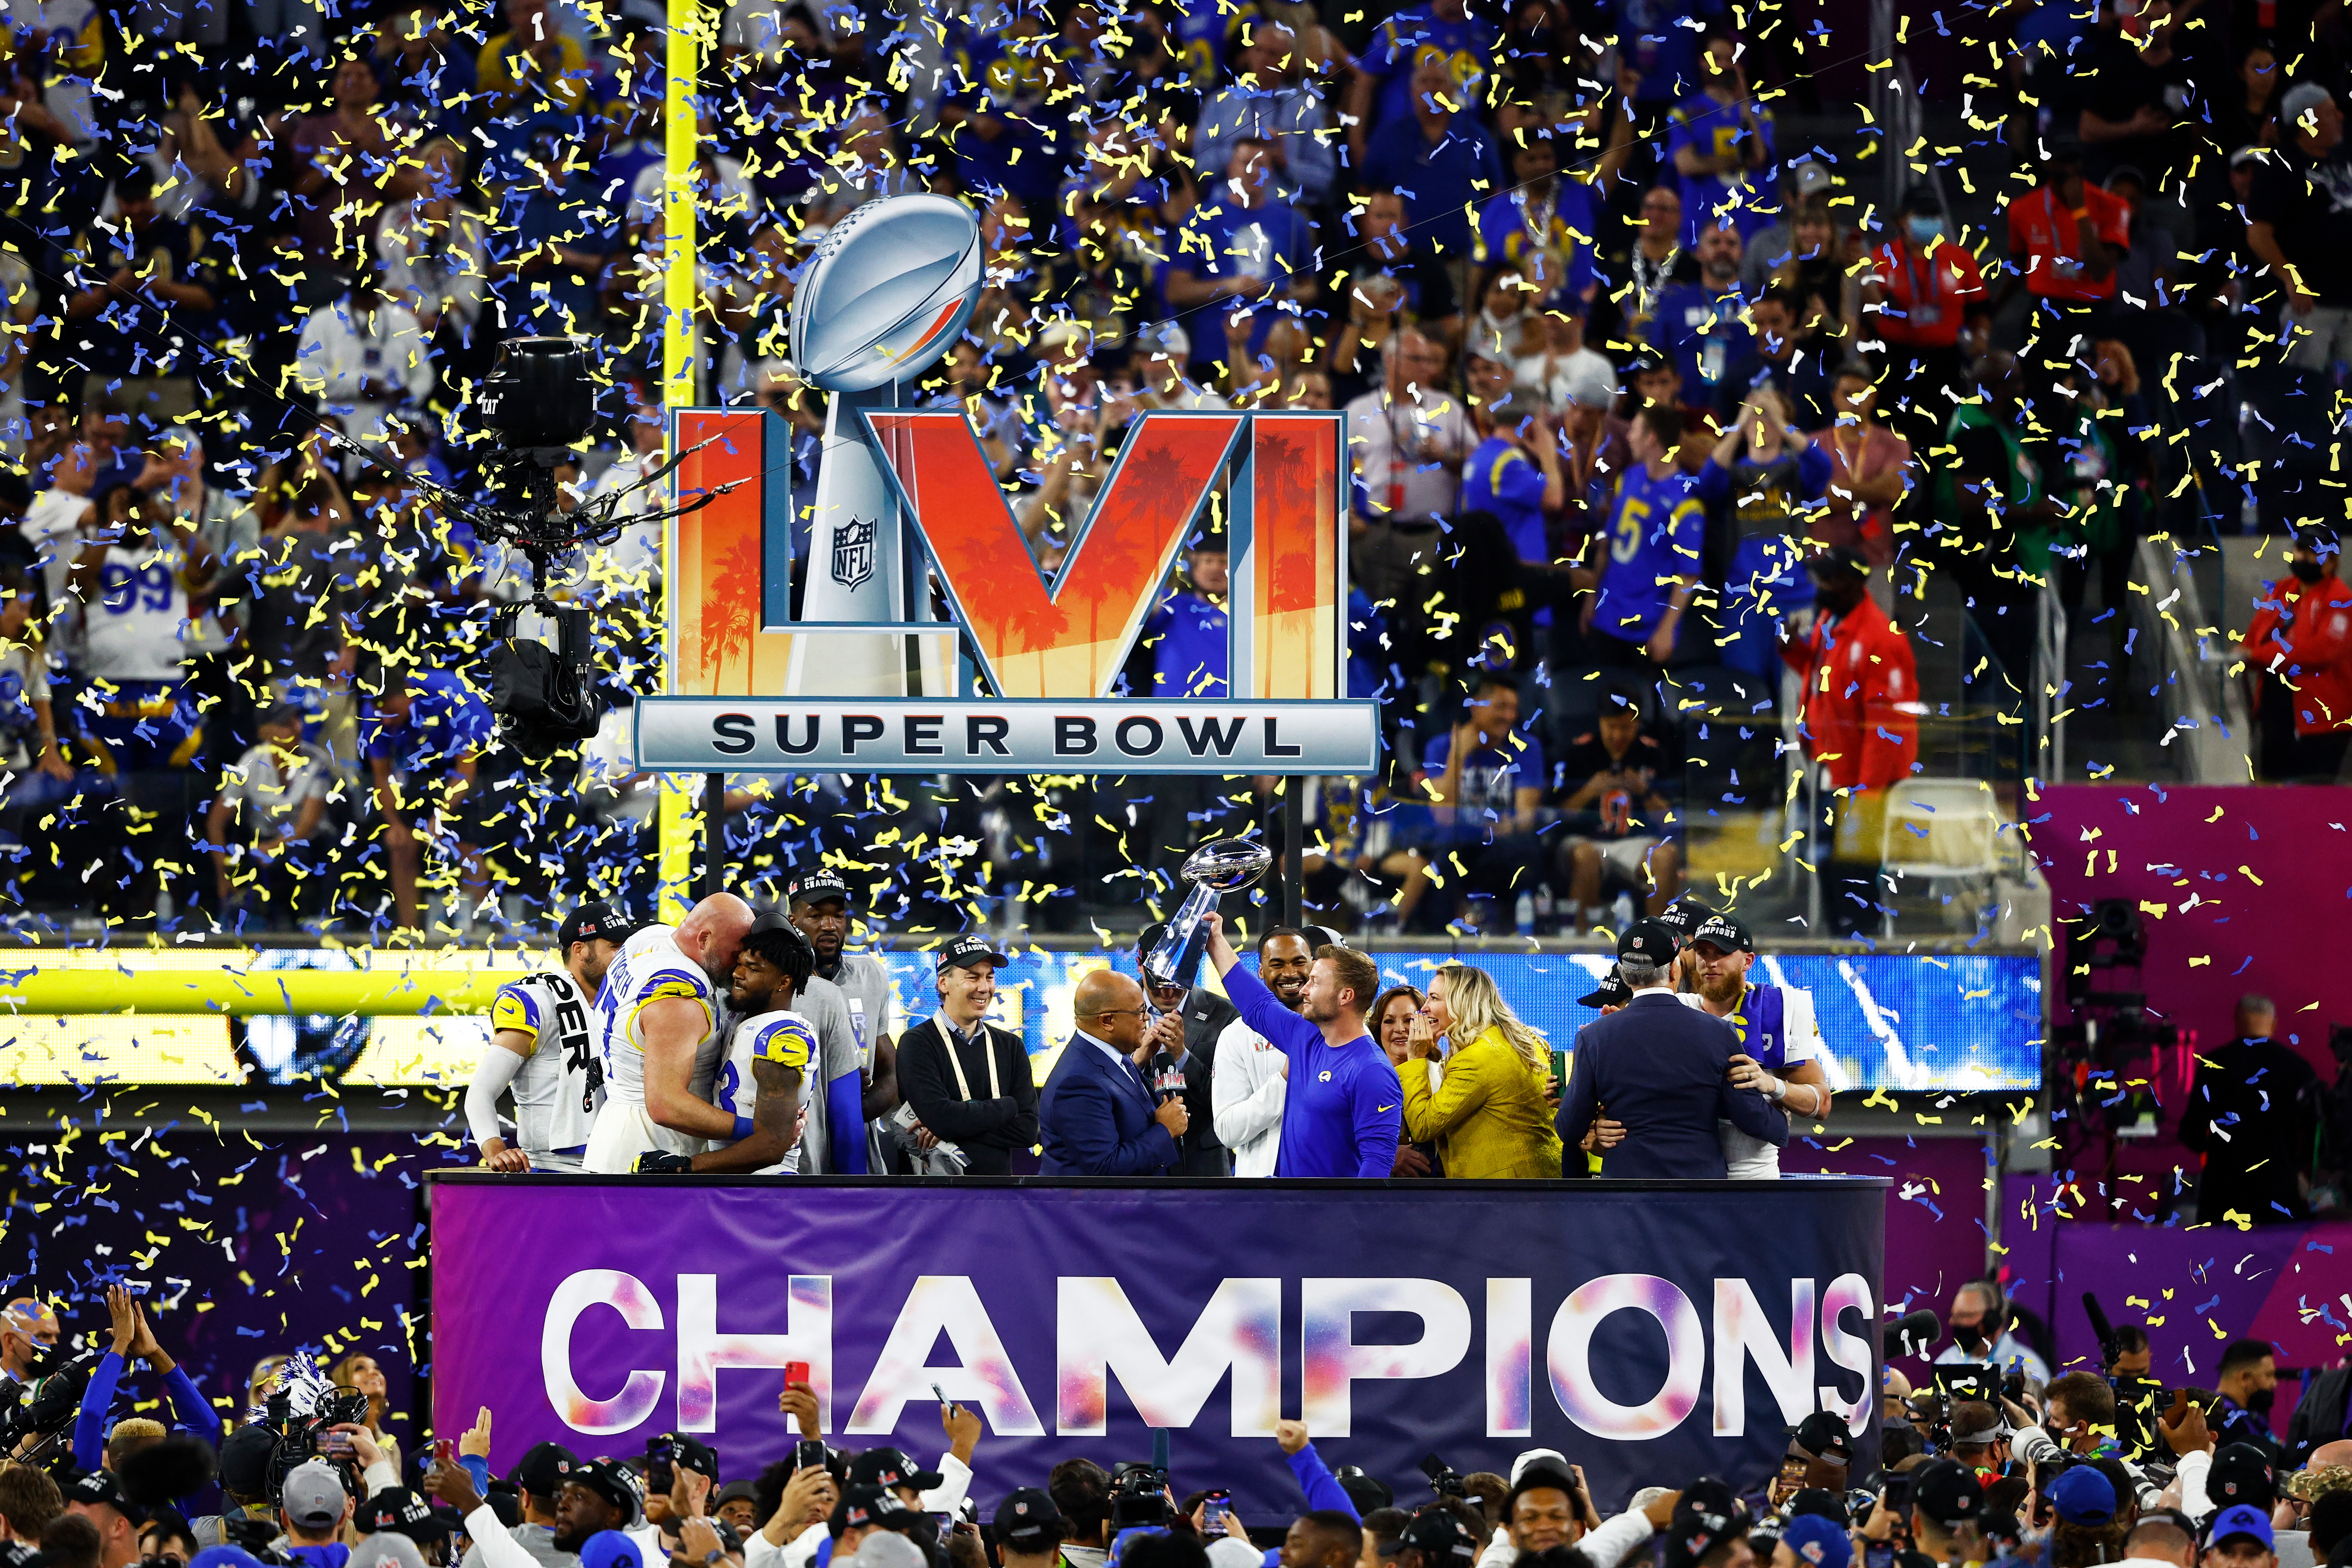 LA Celebrates the Super Bowl Champion Rams With a Victory Parade